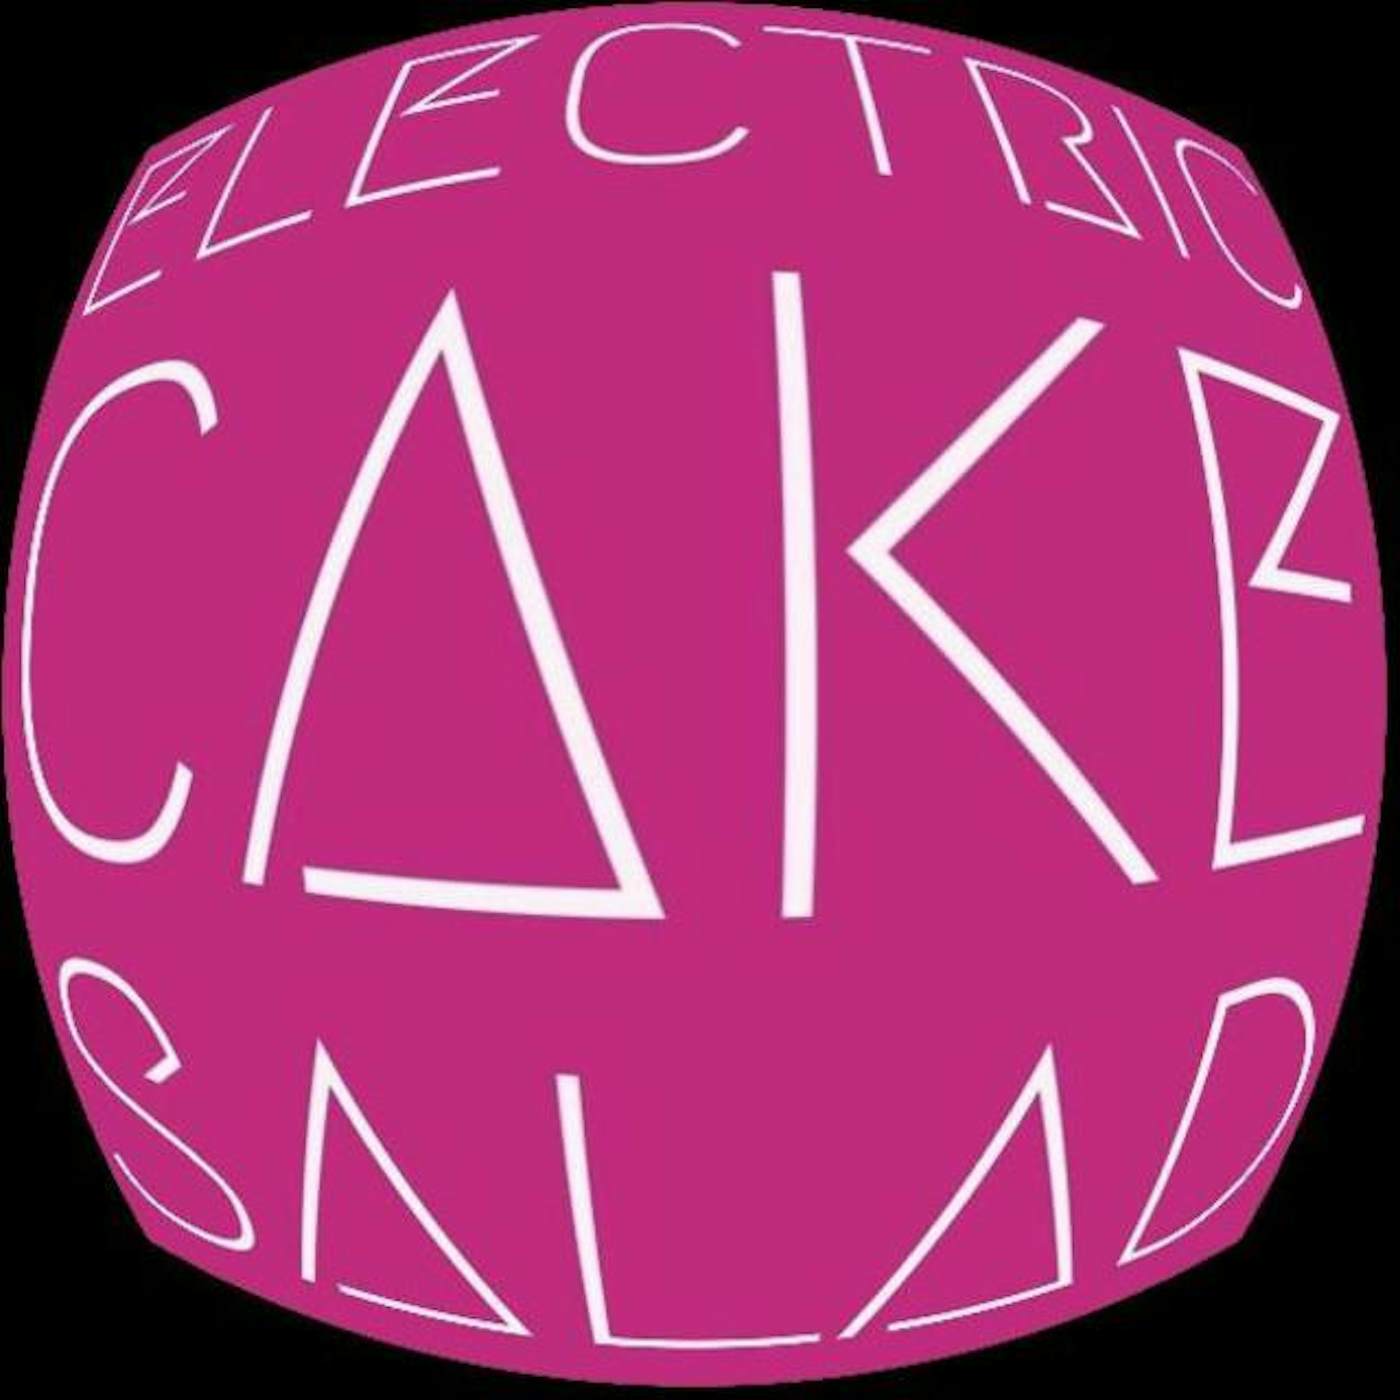 Electric Cake Salad